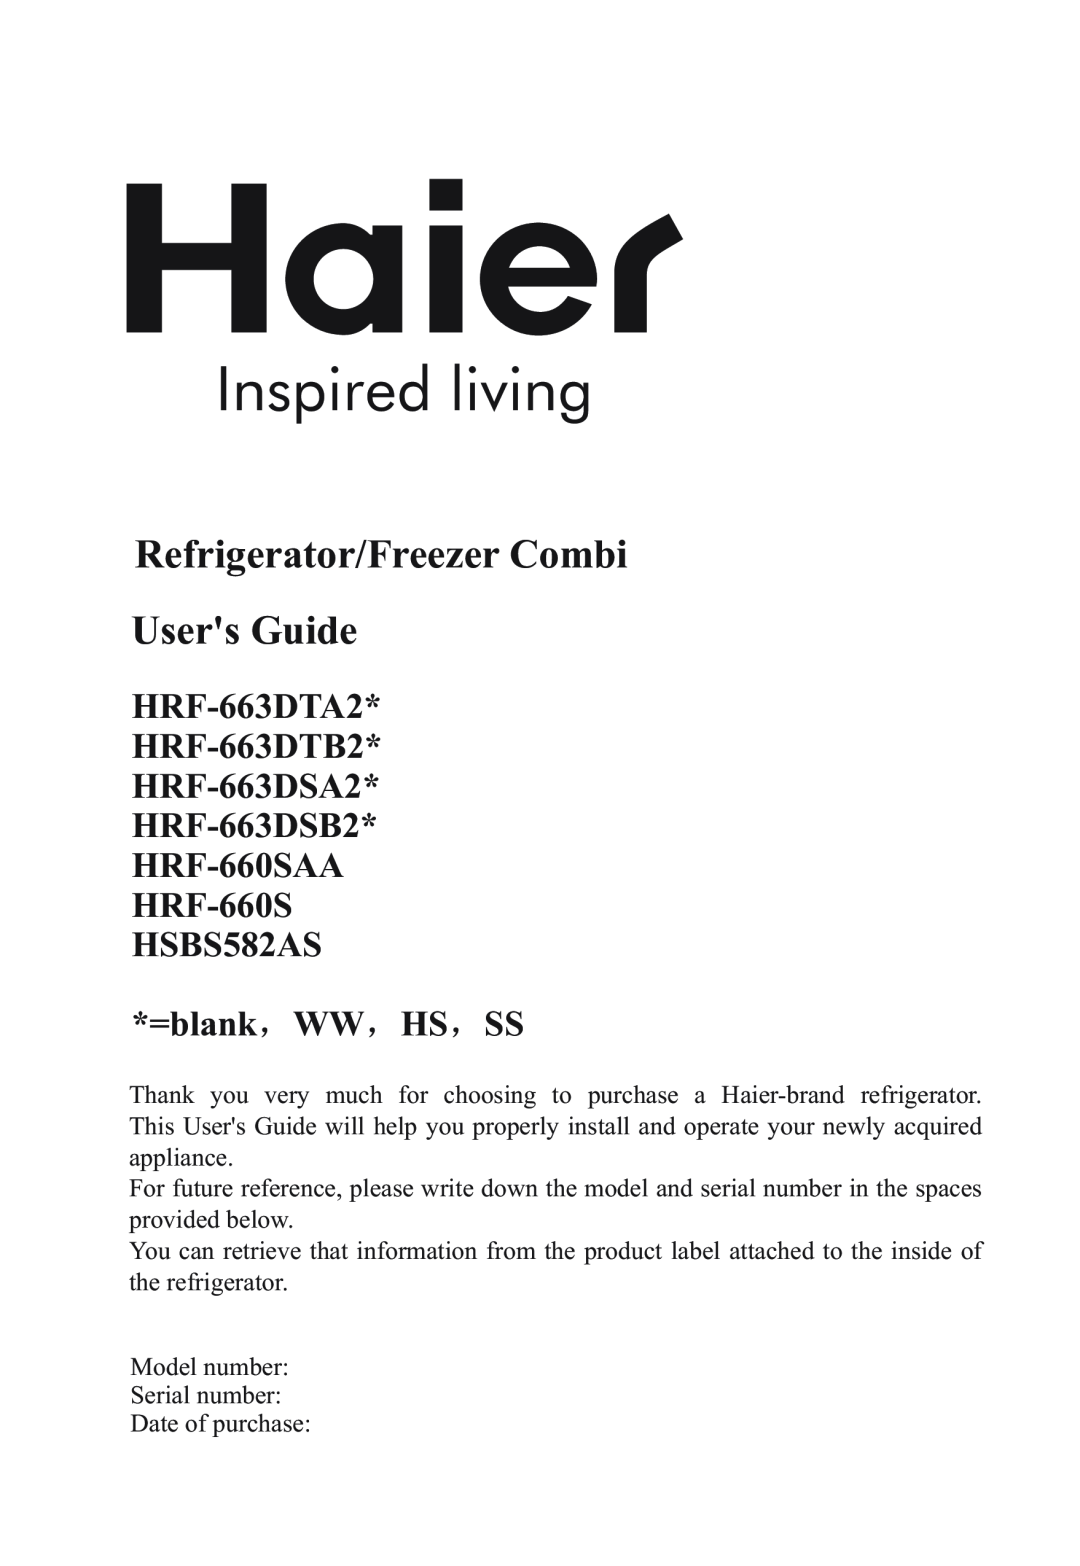 Haier HRF-663DTA2*, HRF-663DSA2* manual Refrigerator/Freezer Combi Users Guide, Inspired living, HSBS582AS =blank WW HS SS 